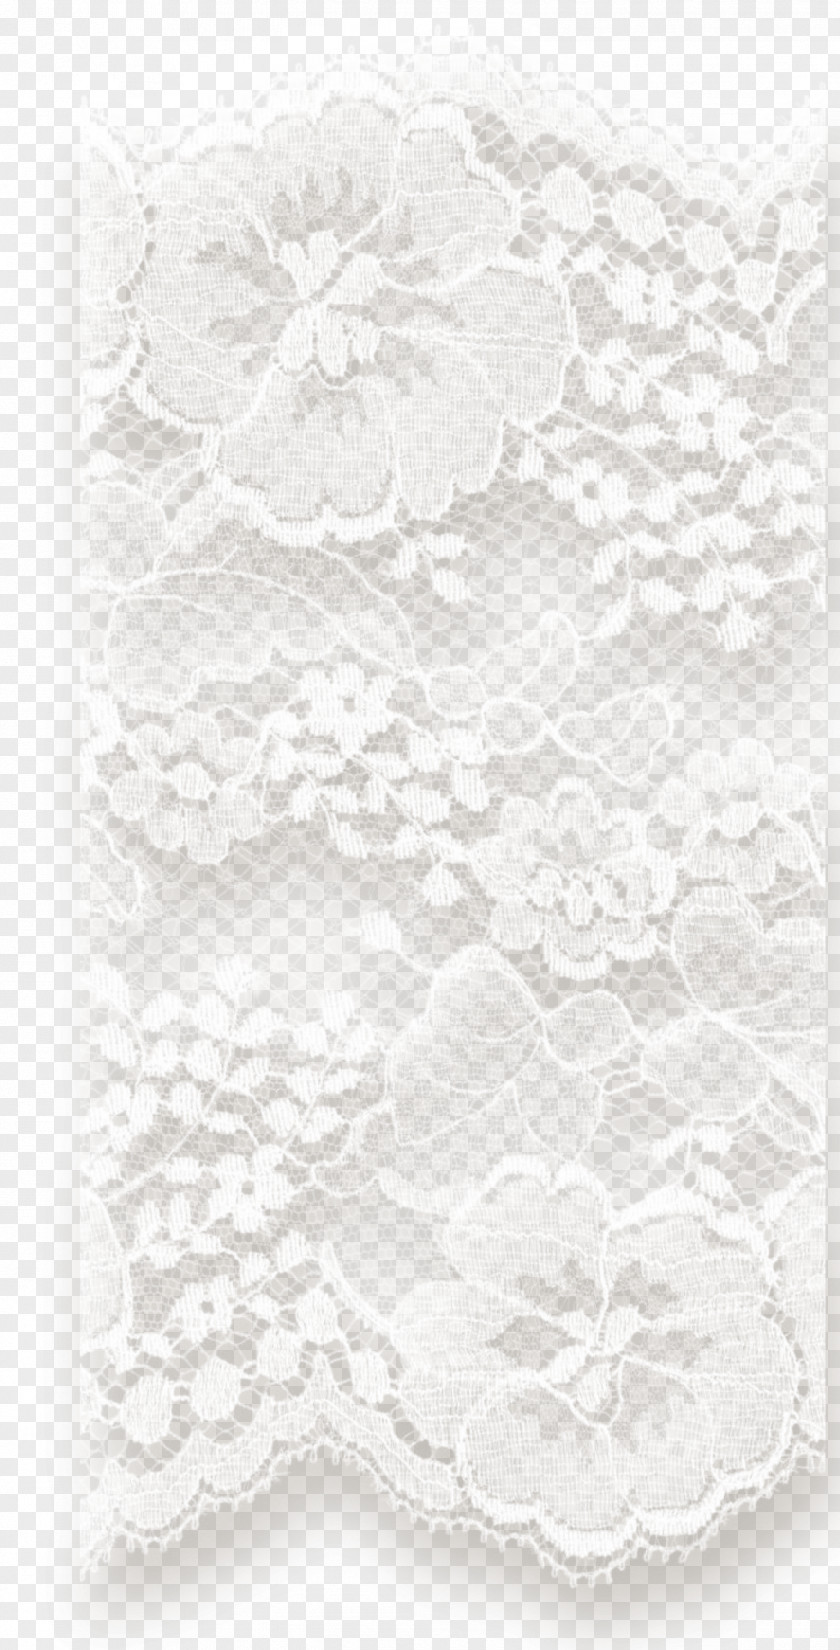 Monochrome Photography Textile White Lace PNG